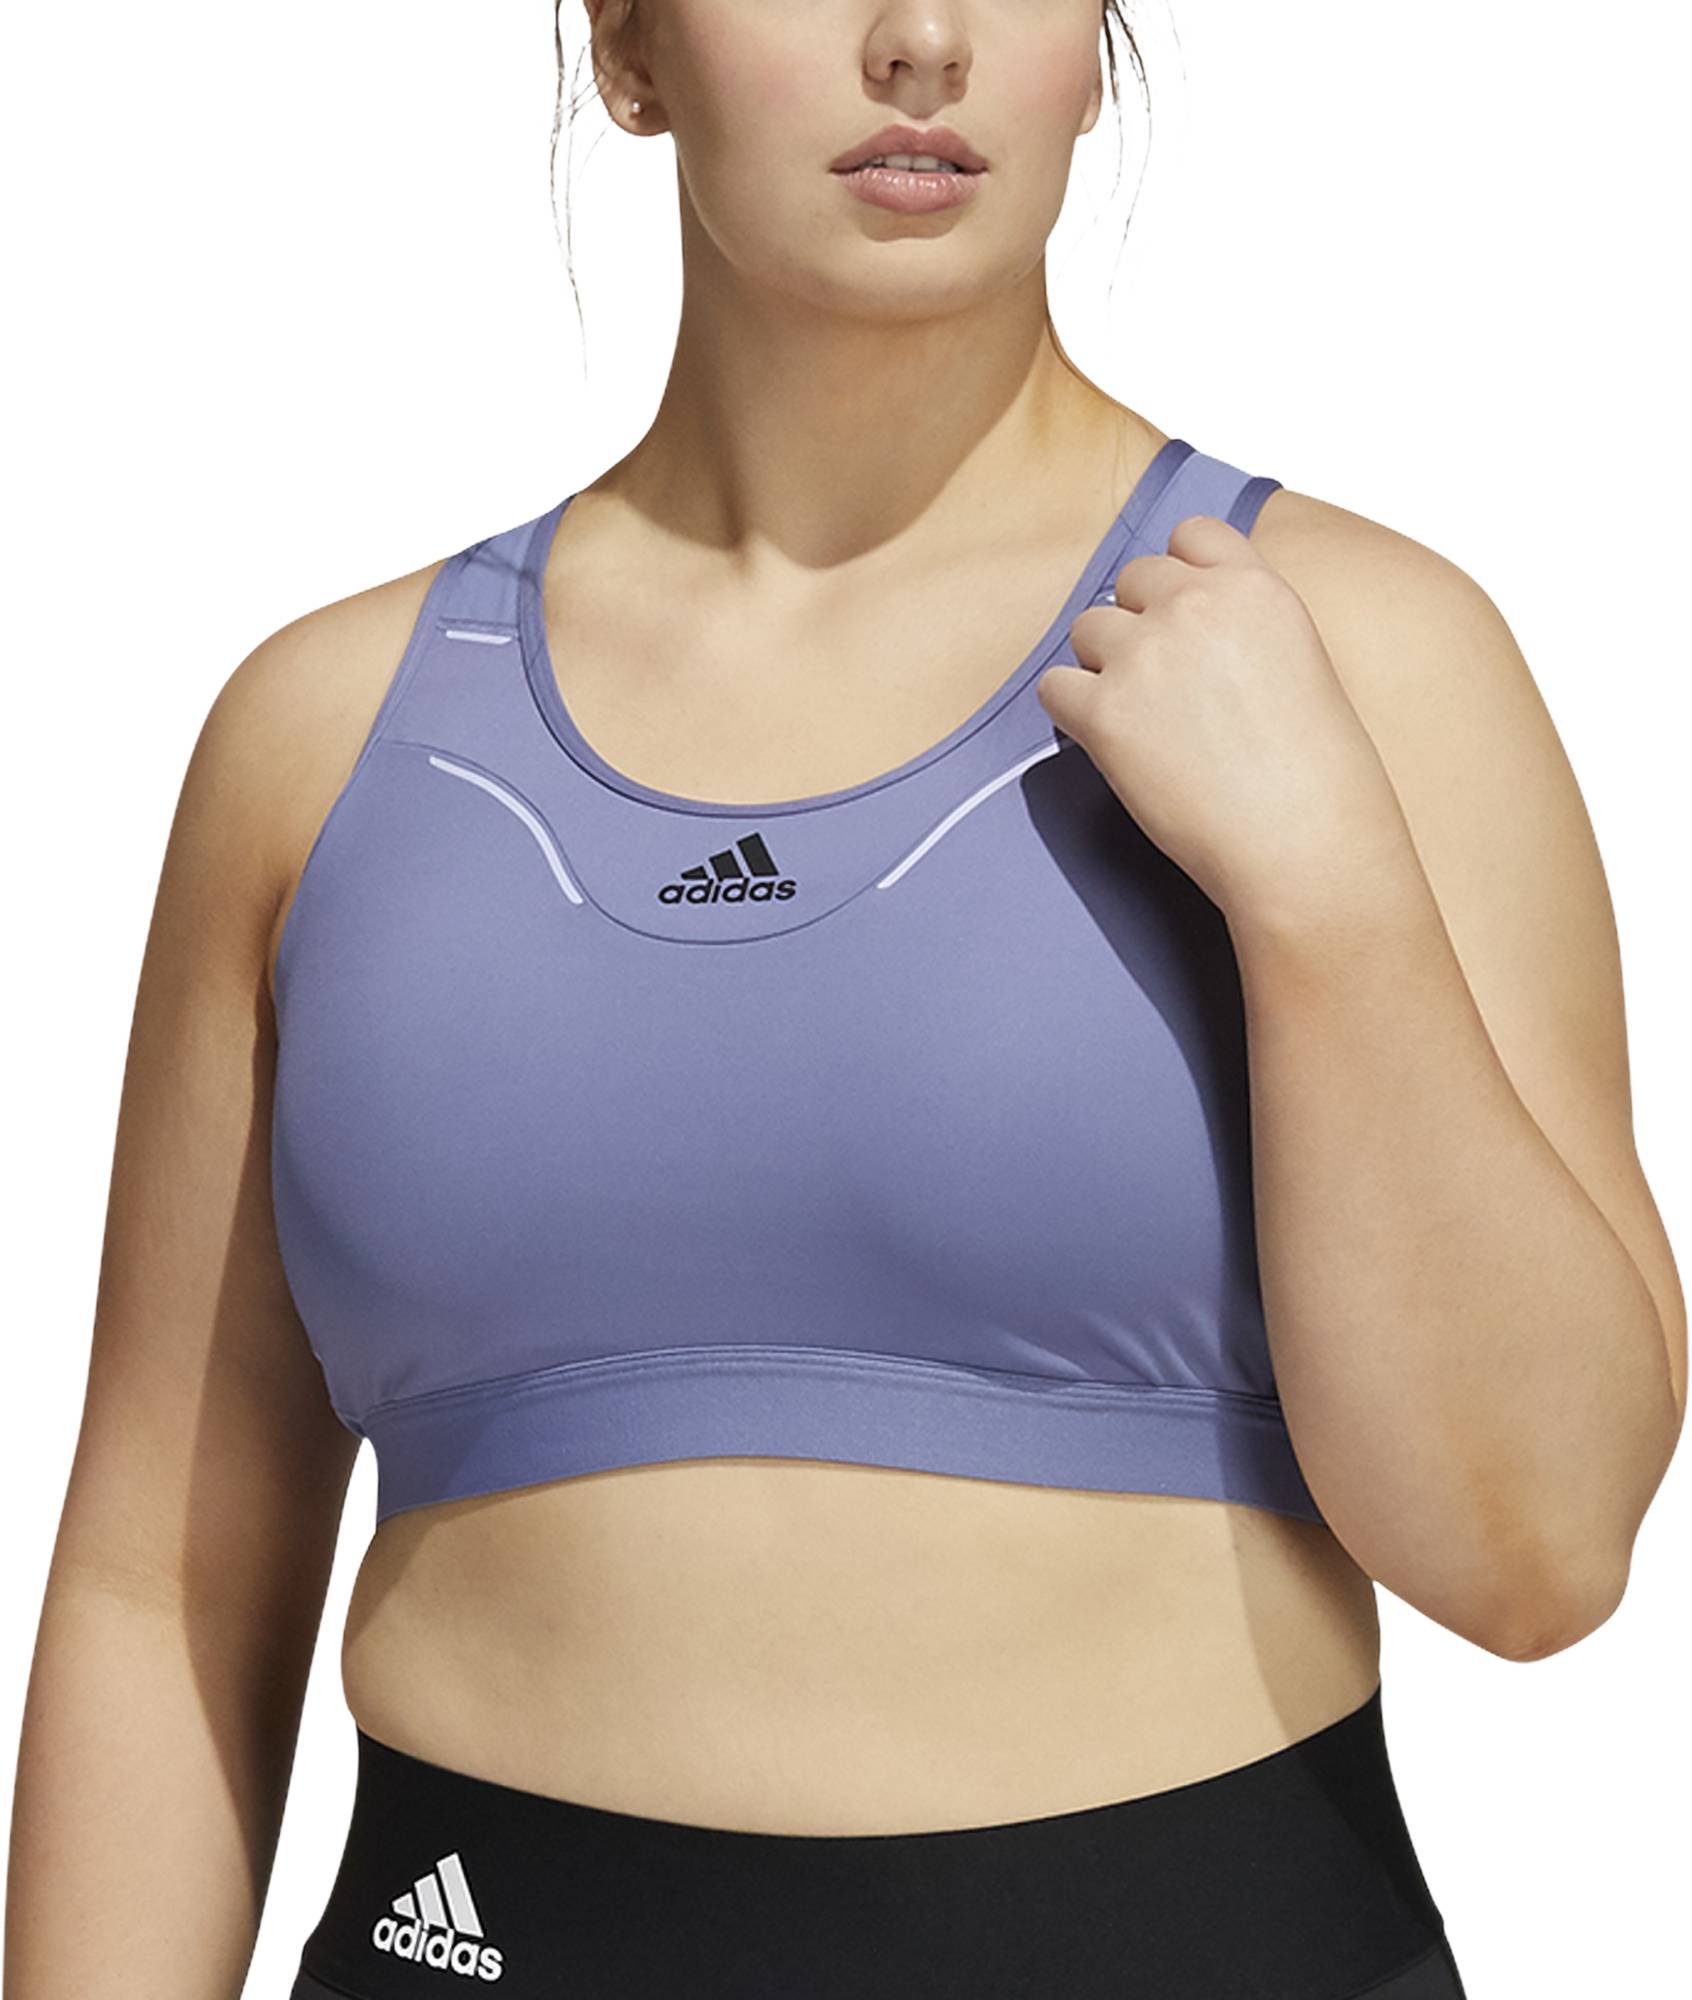 Women’s plus size sports bra